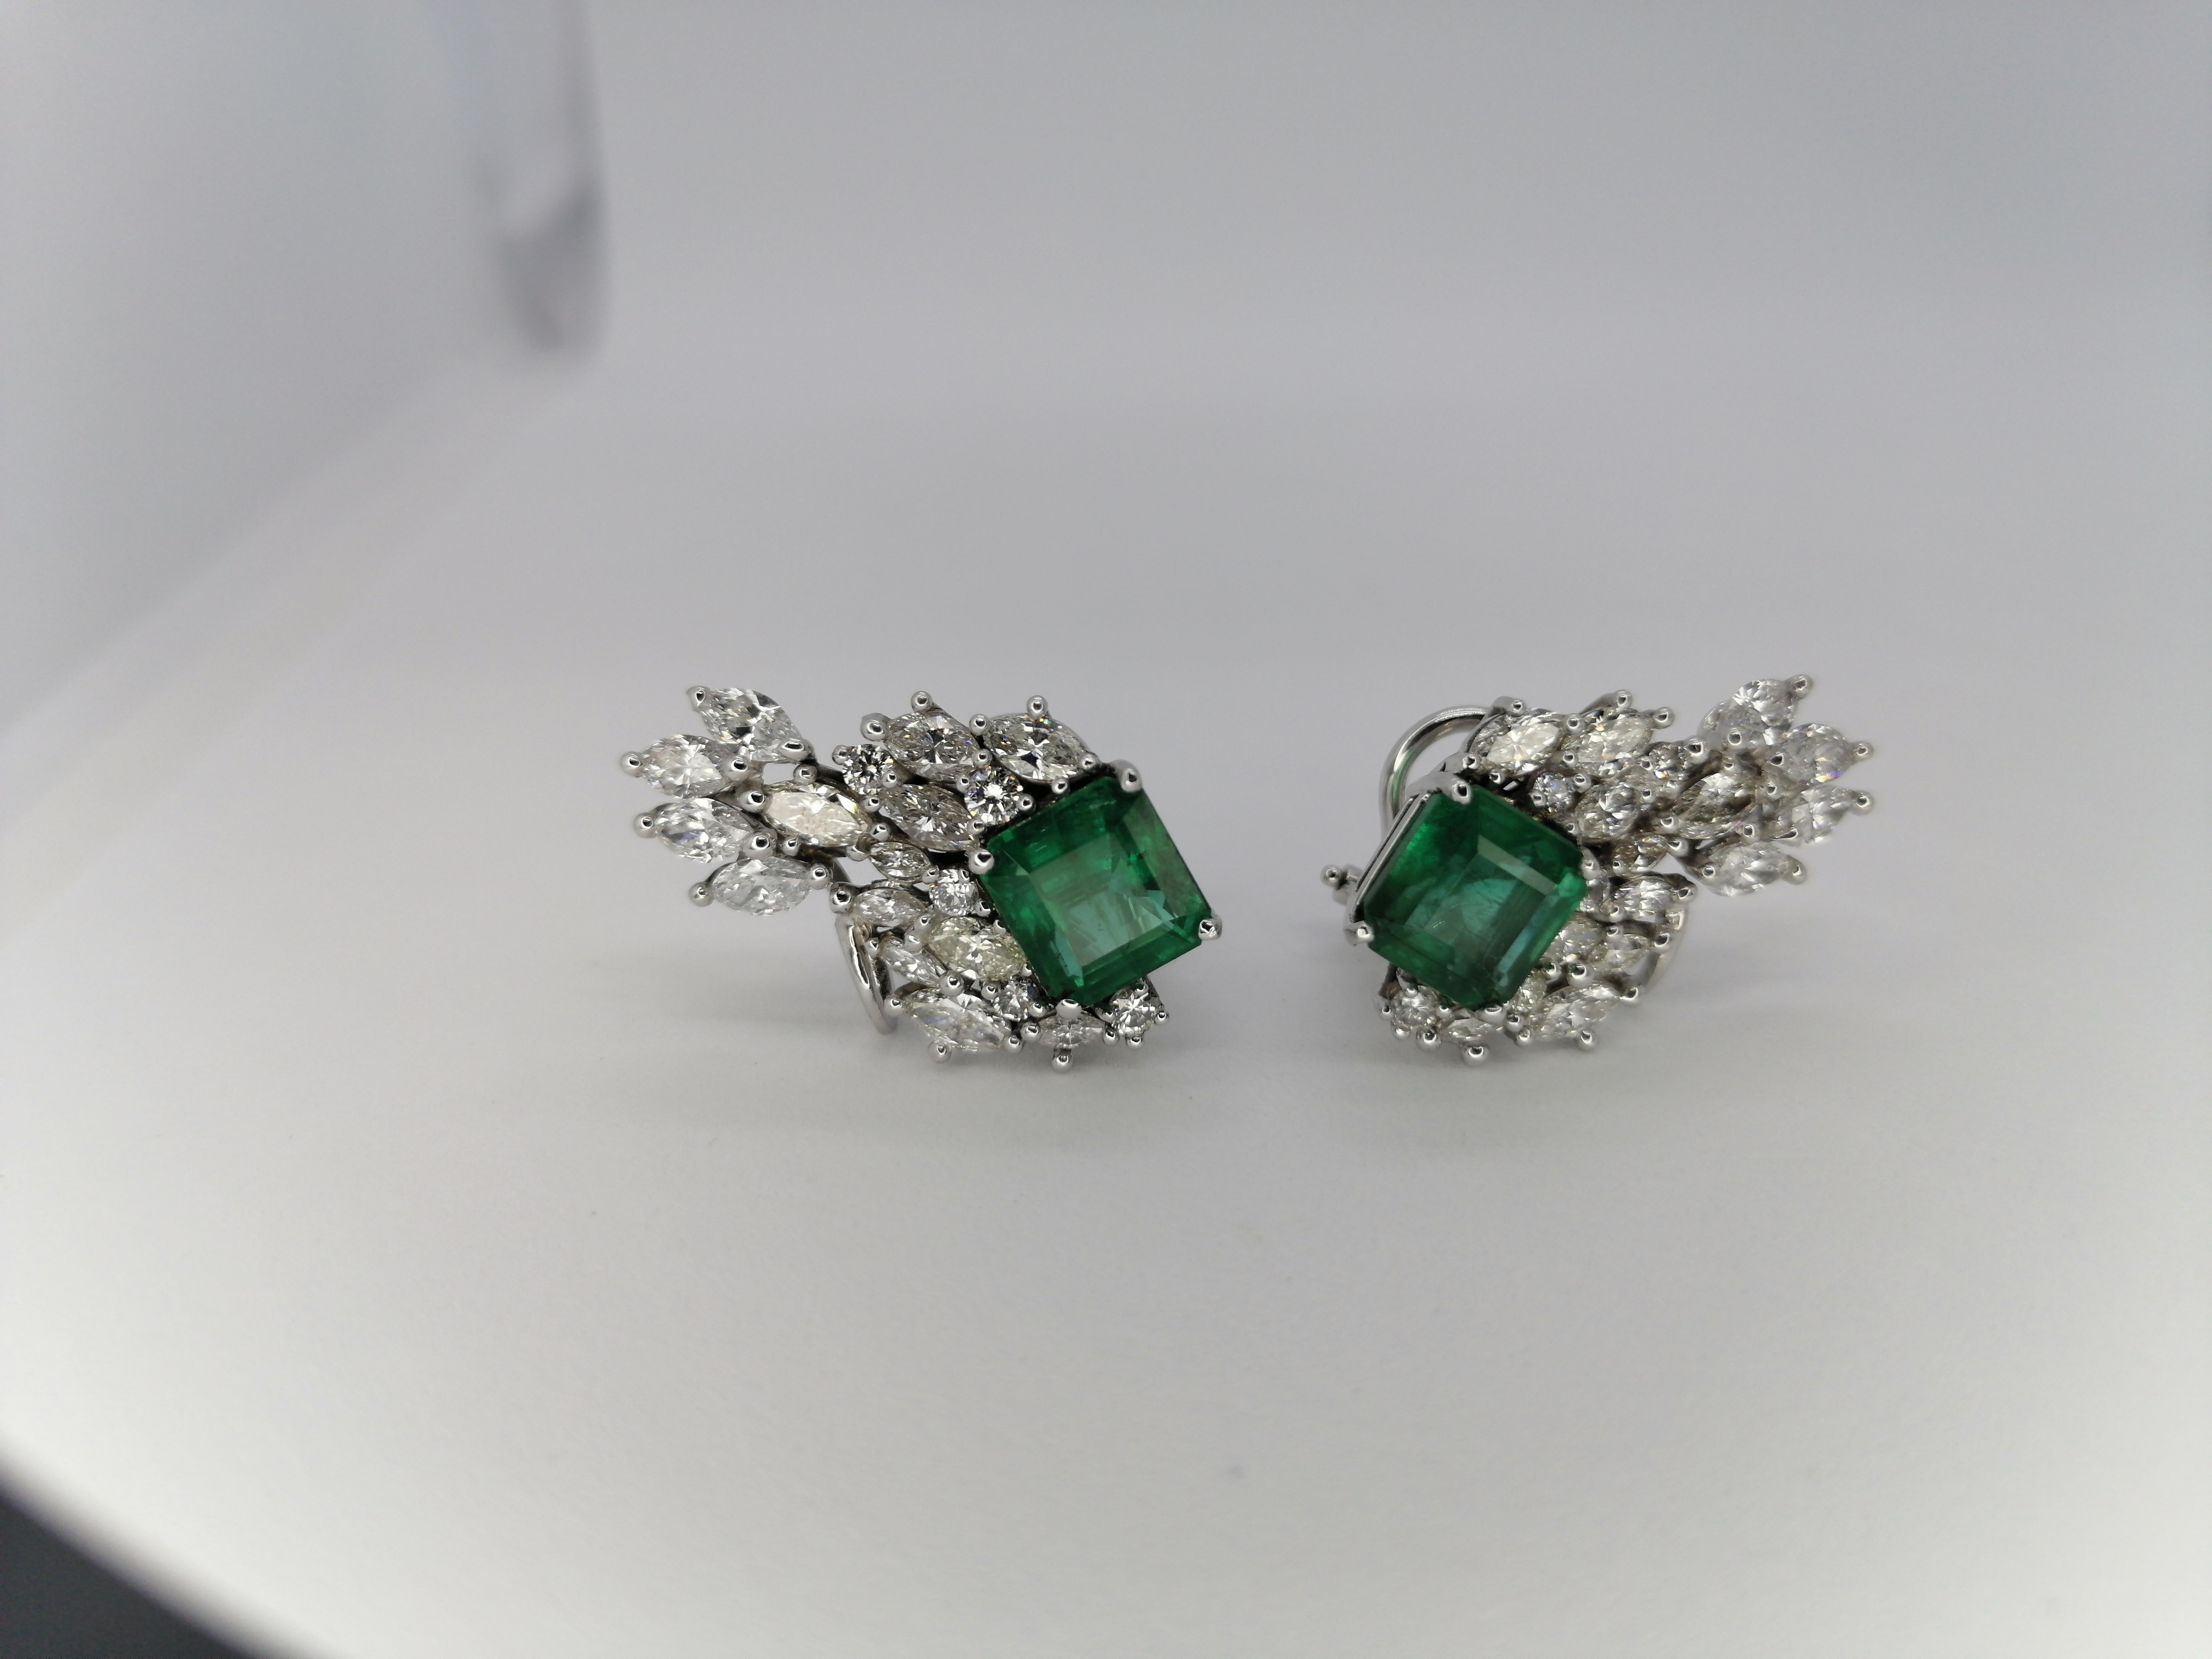 Emerald Cut IGI ANTWERP Carat Natural Emerald Marquise Diamond Earrings 18 Karat